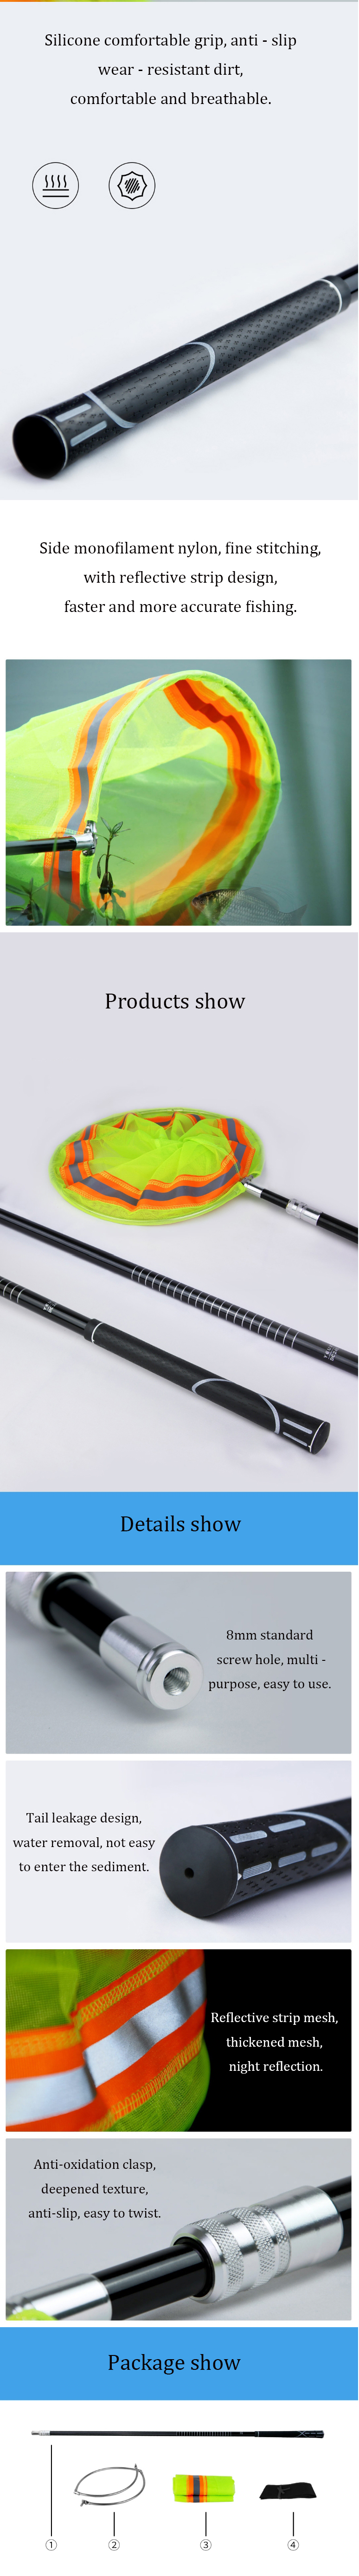 YEUX-15M-Telescopic-Carbon-Rod-Fishing-Net-Set-Folding-Fishing-Net-Outdoor-Fishing-Tools-Set-from-1585208-2